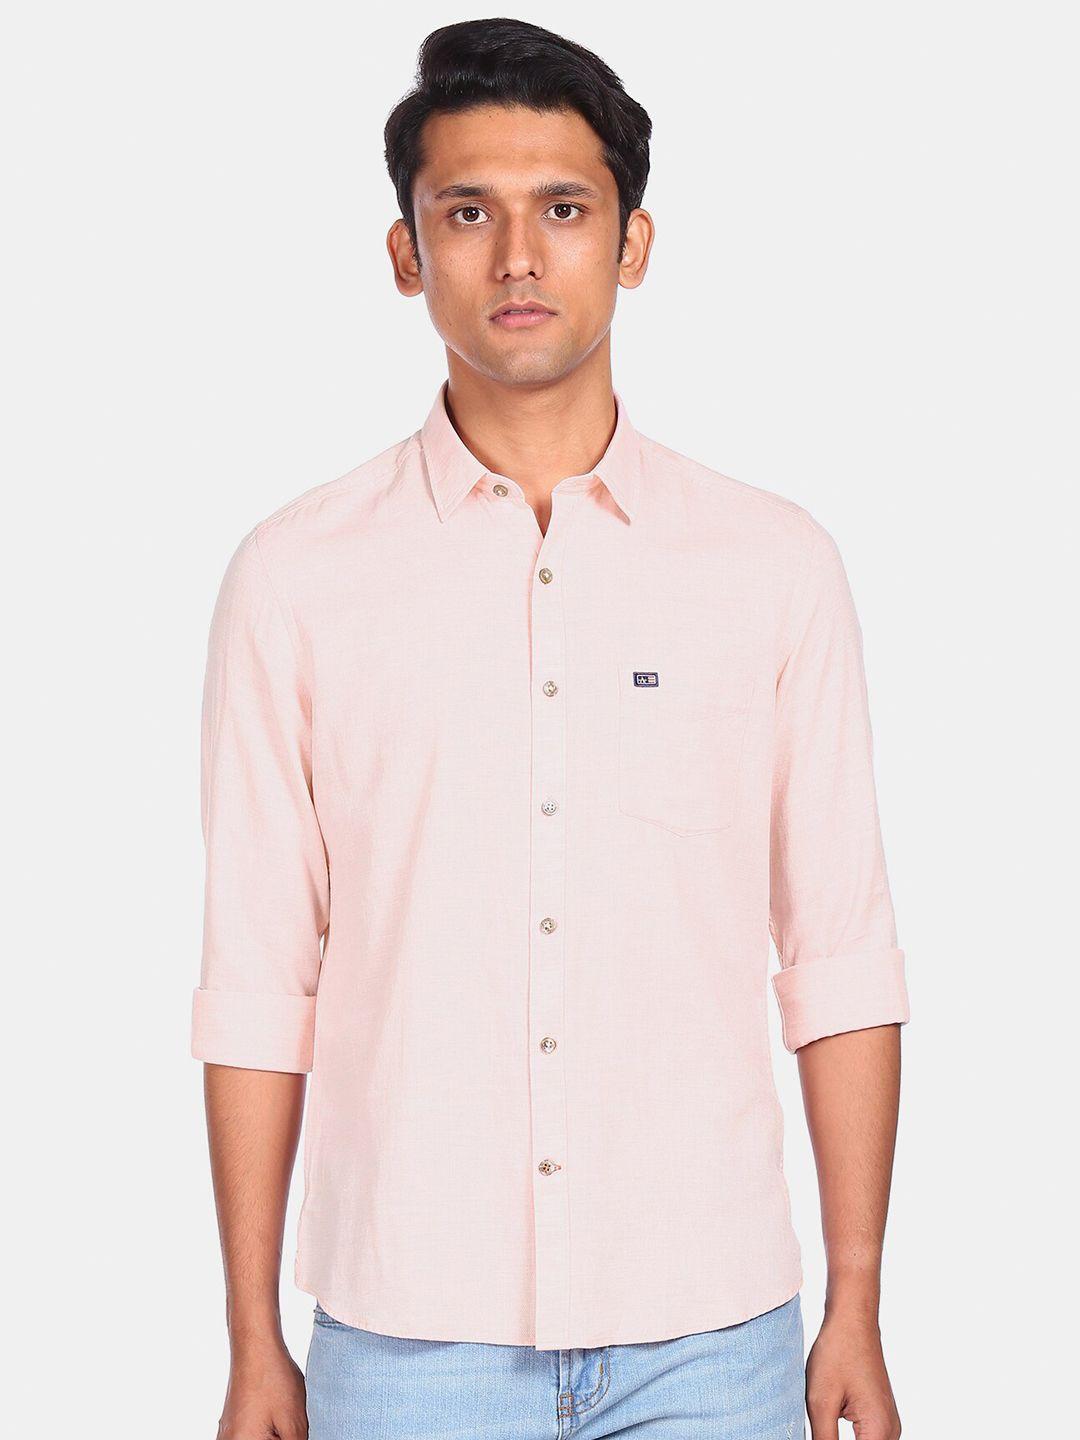 arrow-sport-men-pink-opaque-casual-shirt